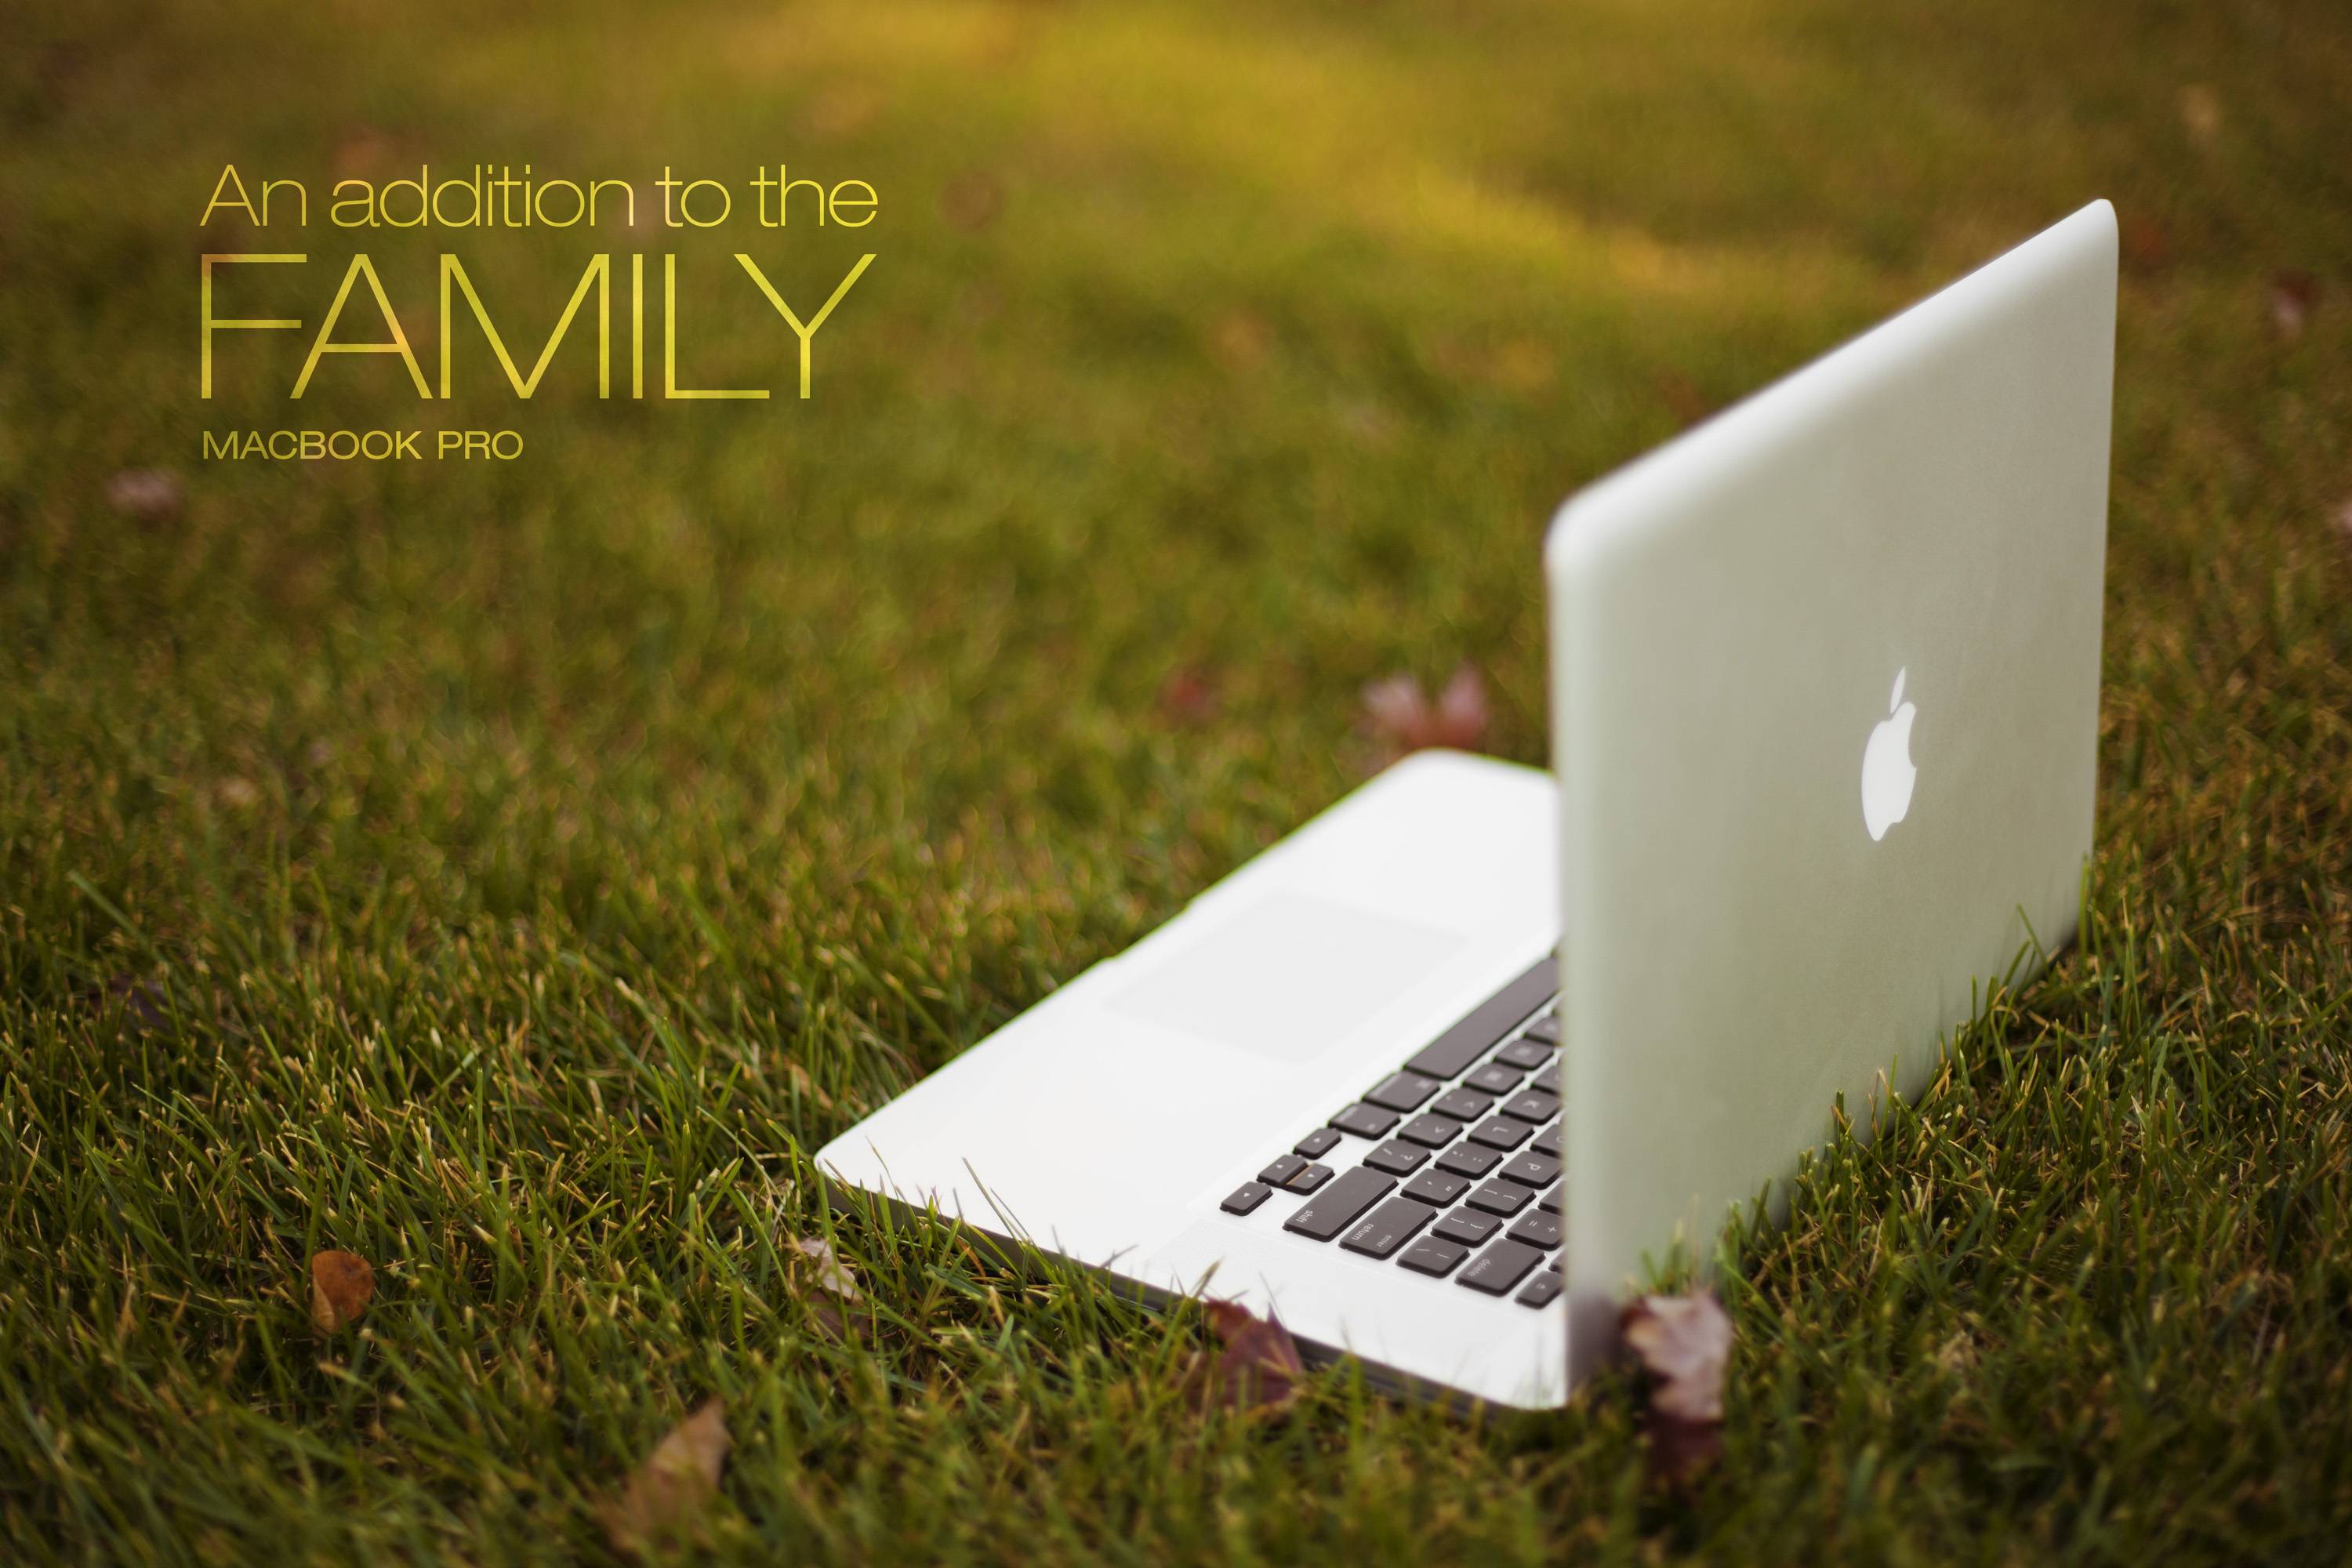 Macbook Pro, Apple, Laptop, Grass